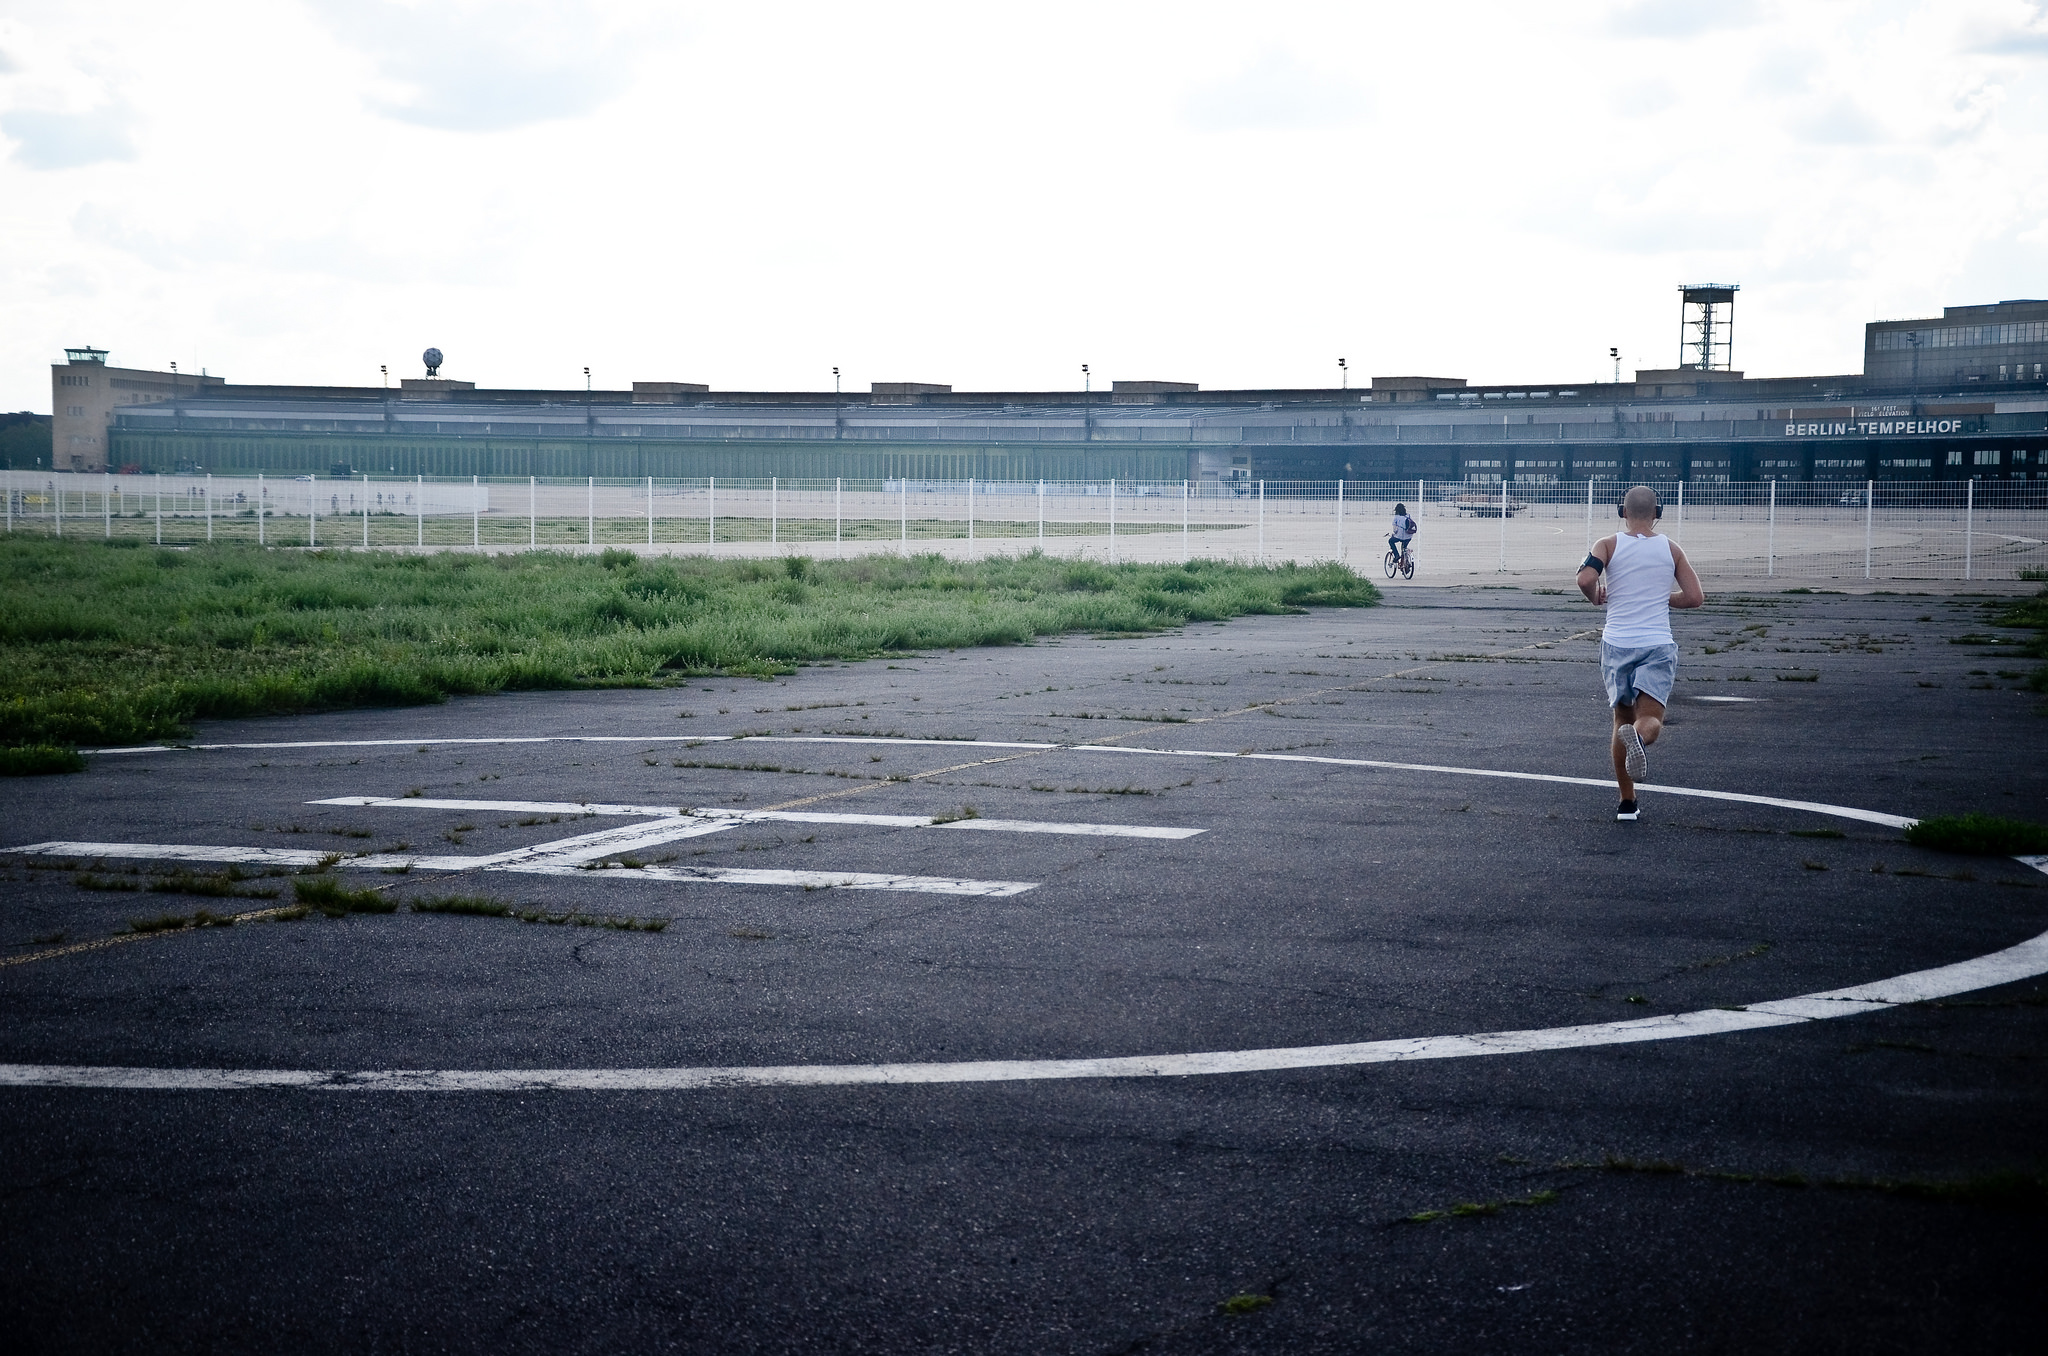 Un weekend da ricordare – Parte terza: Tempelhofer Feld